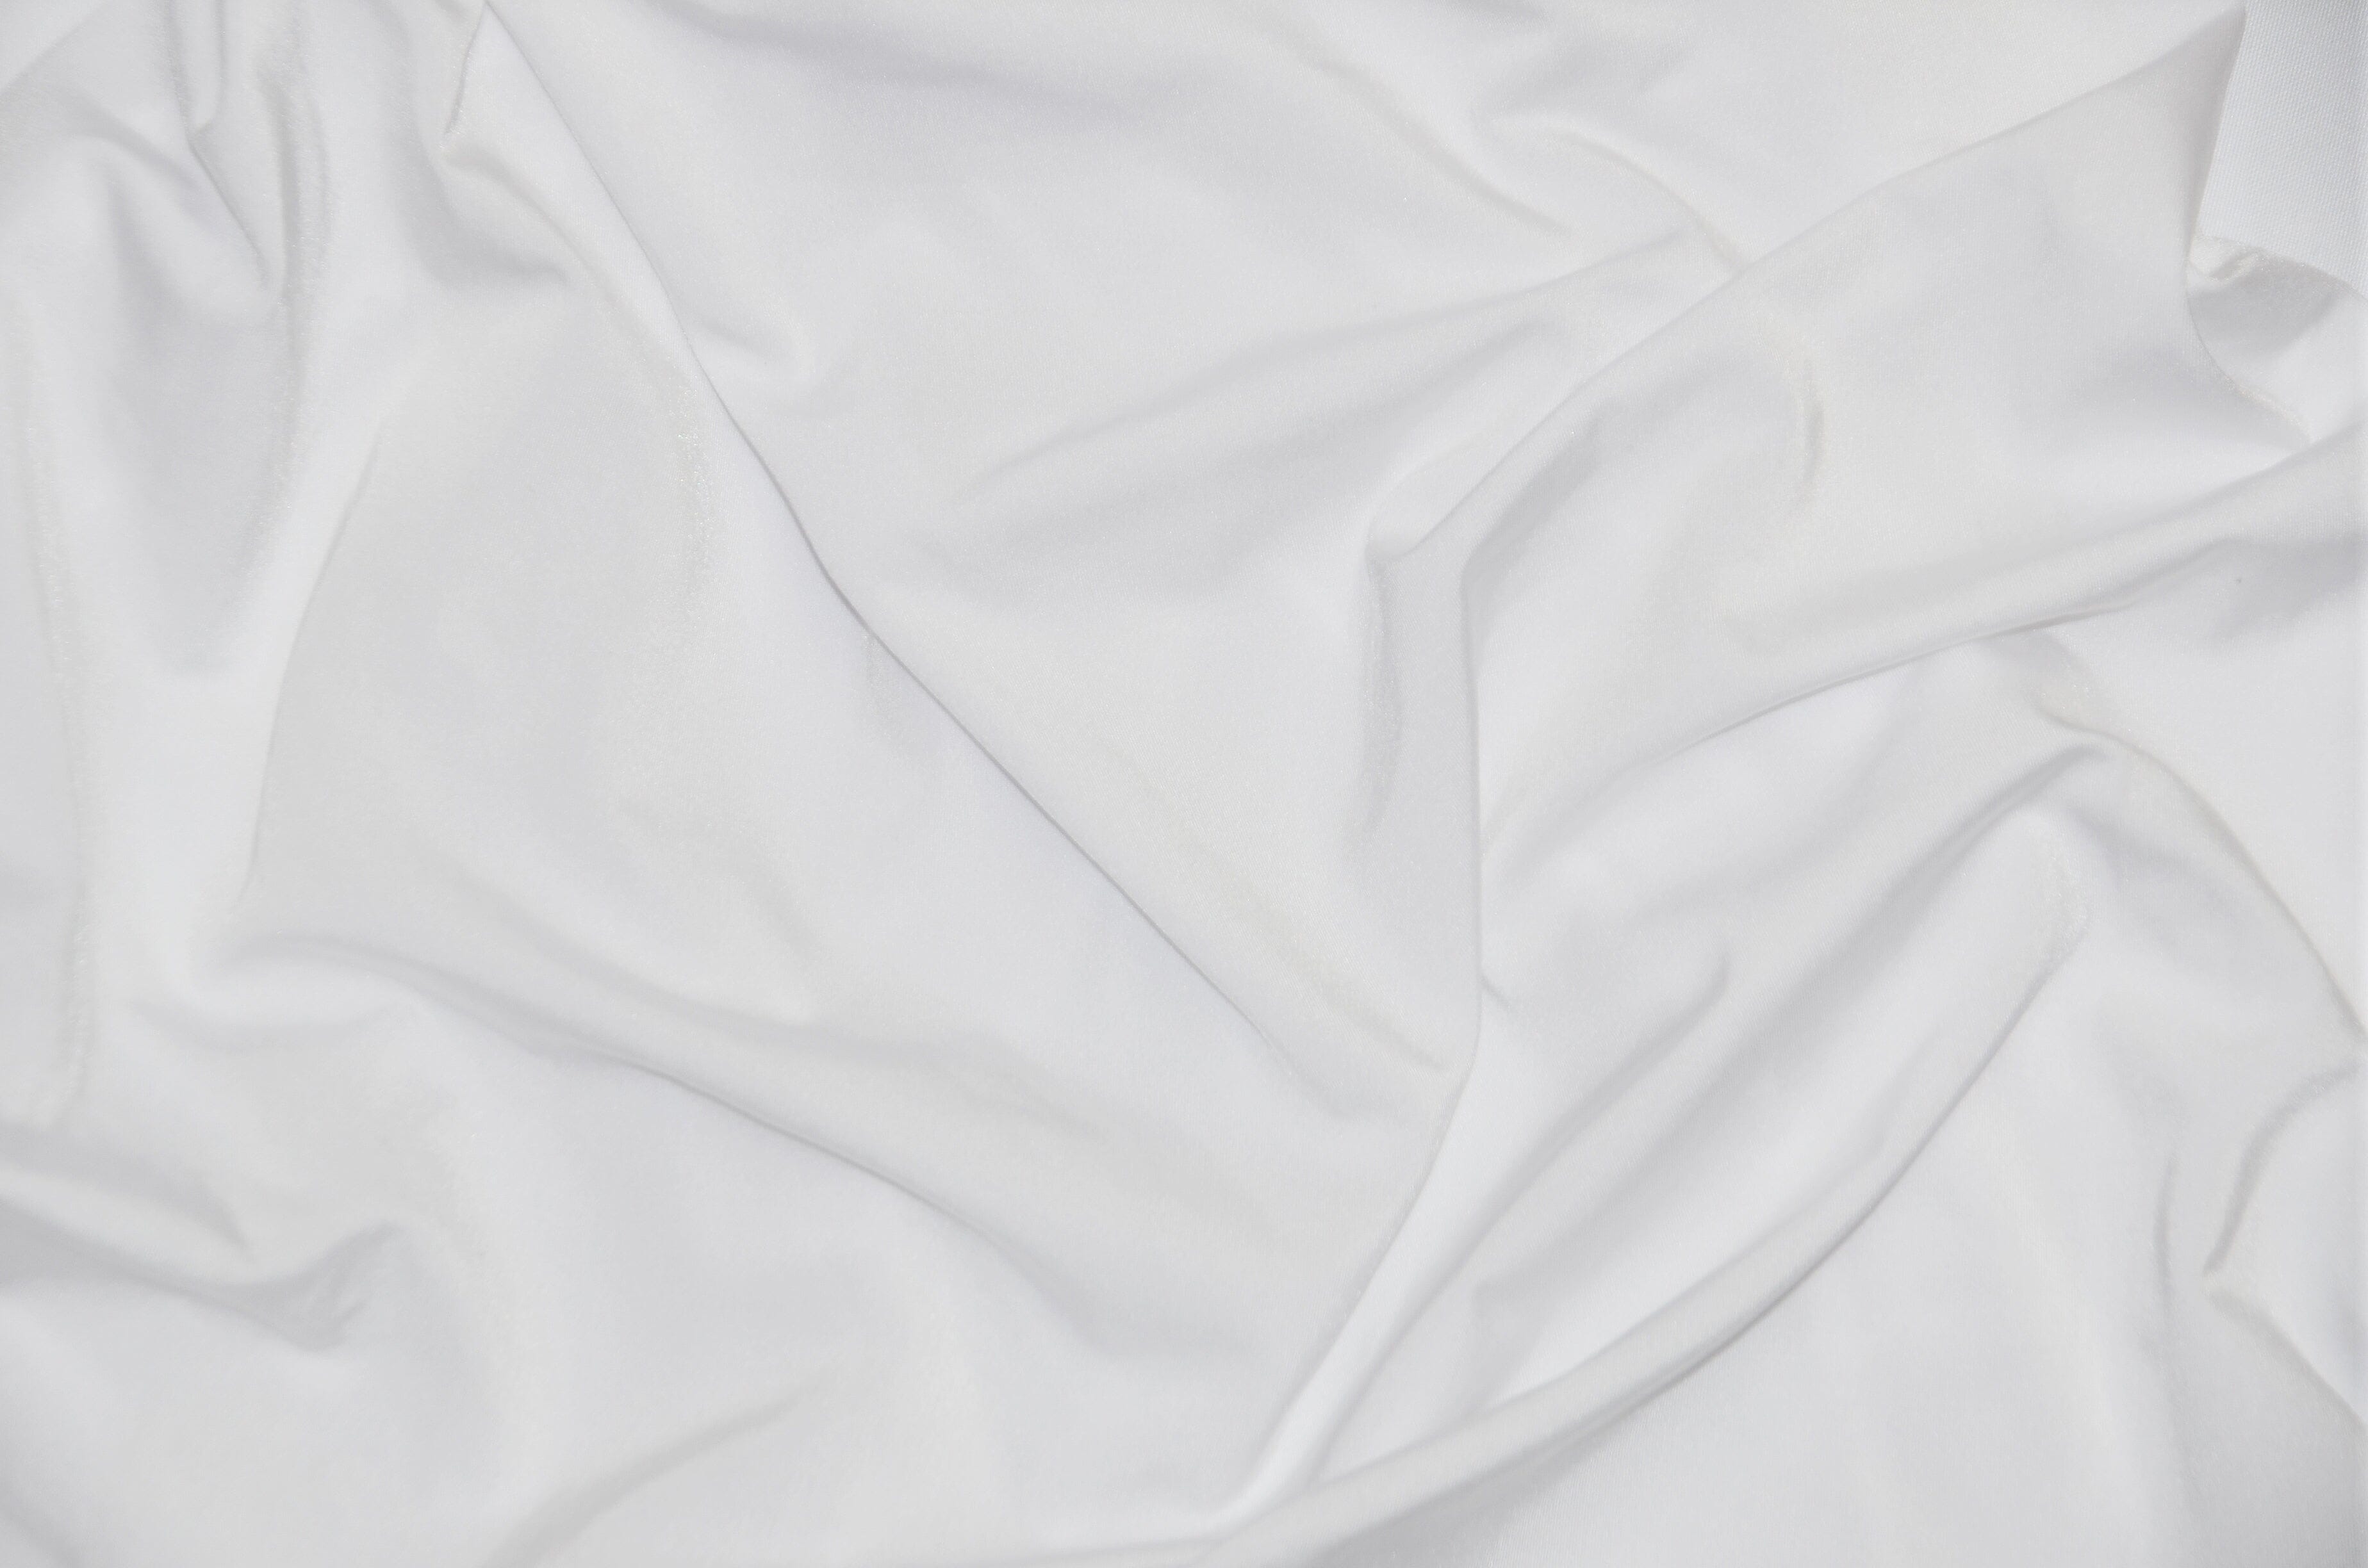 Nylon Spandex Fabric (1 yard is 36 inches 60width)